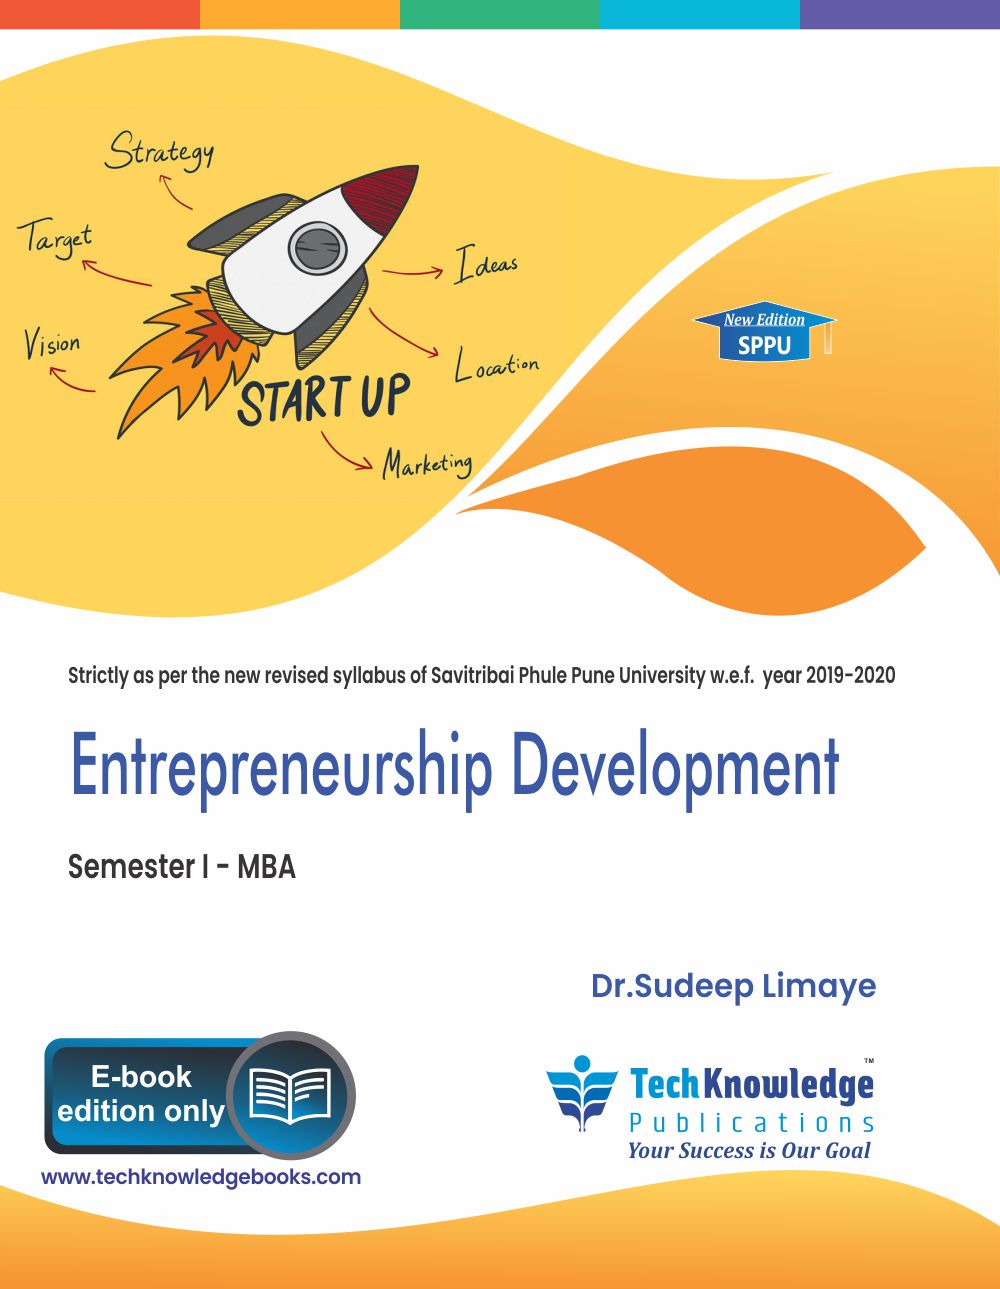 article review on entrepreneurship and enterprise development